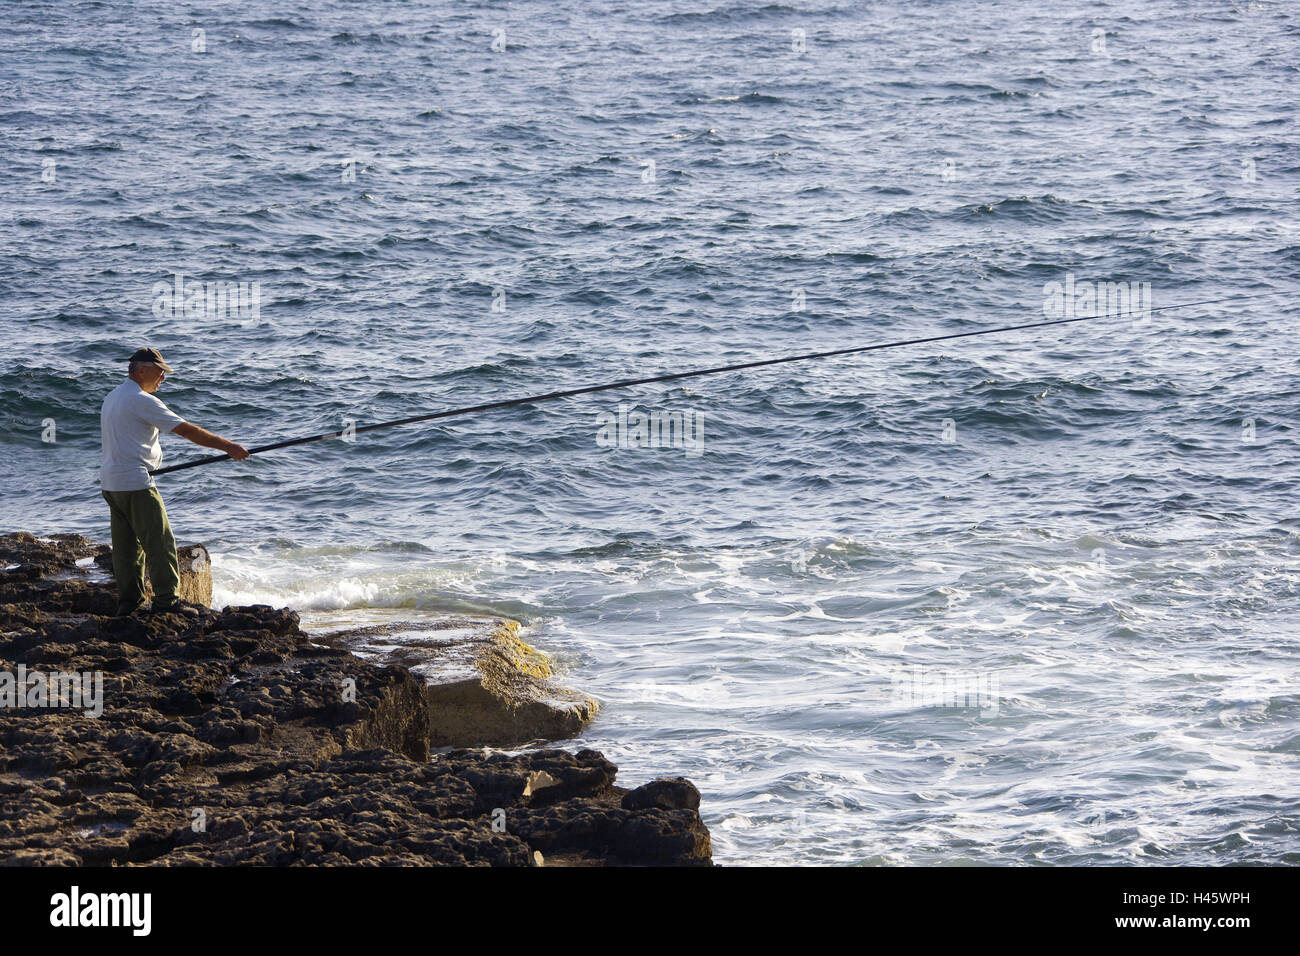 Cyprus, bile coast, angler, sea, Stock Photo